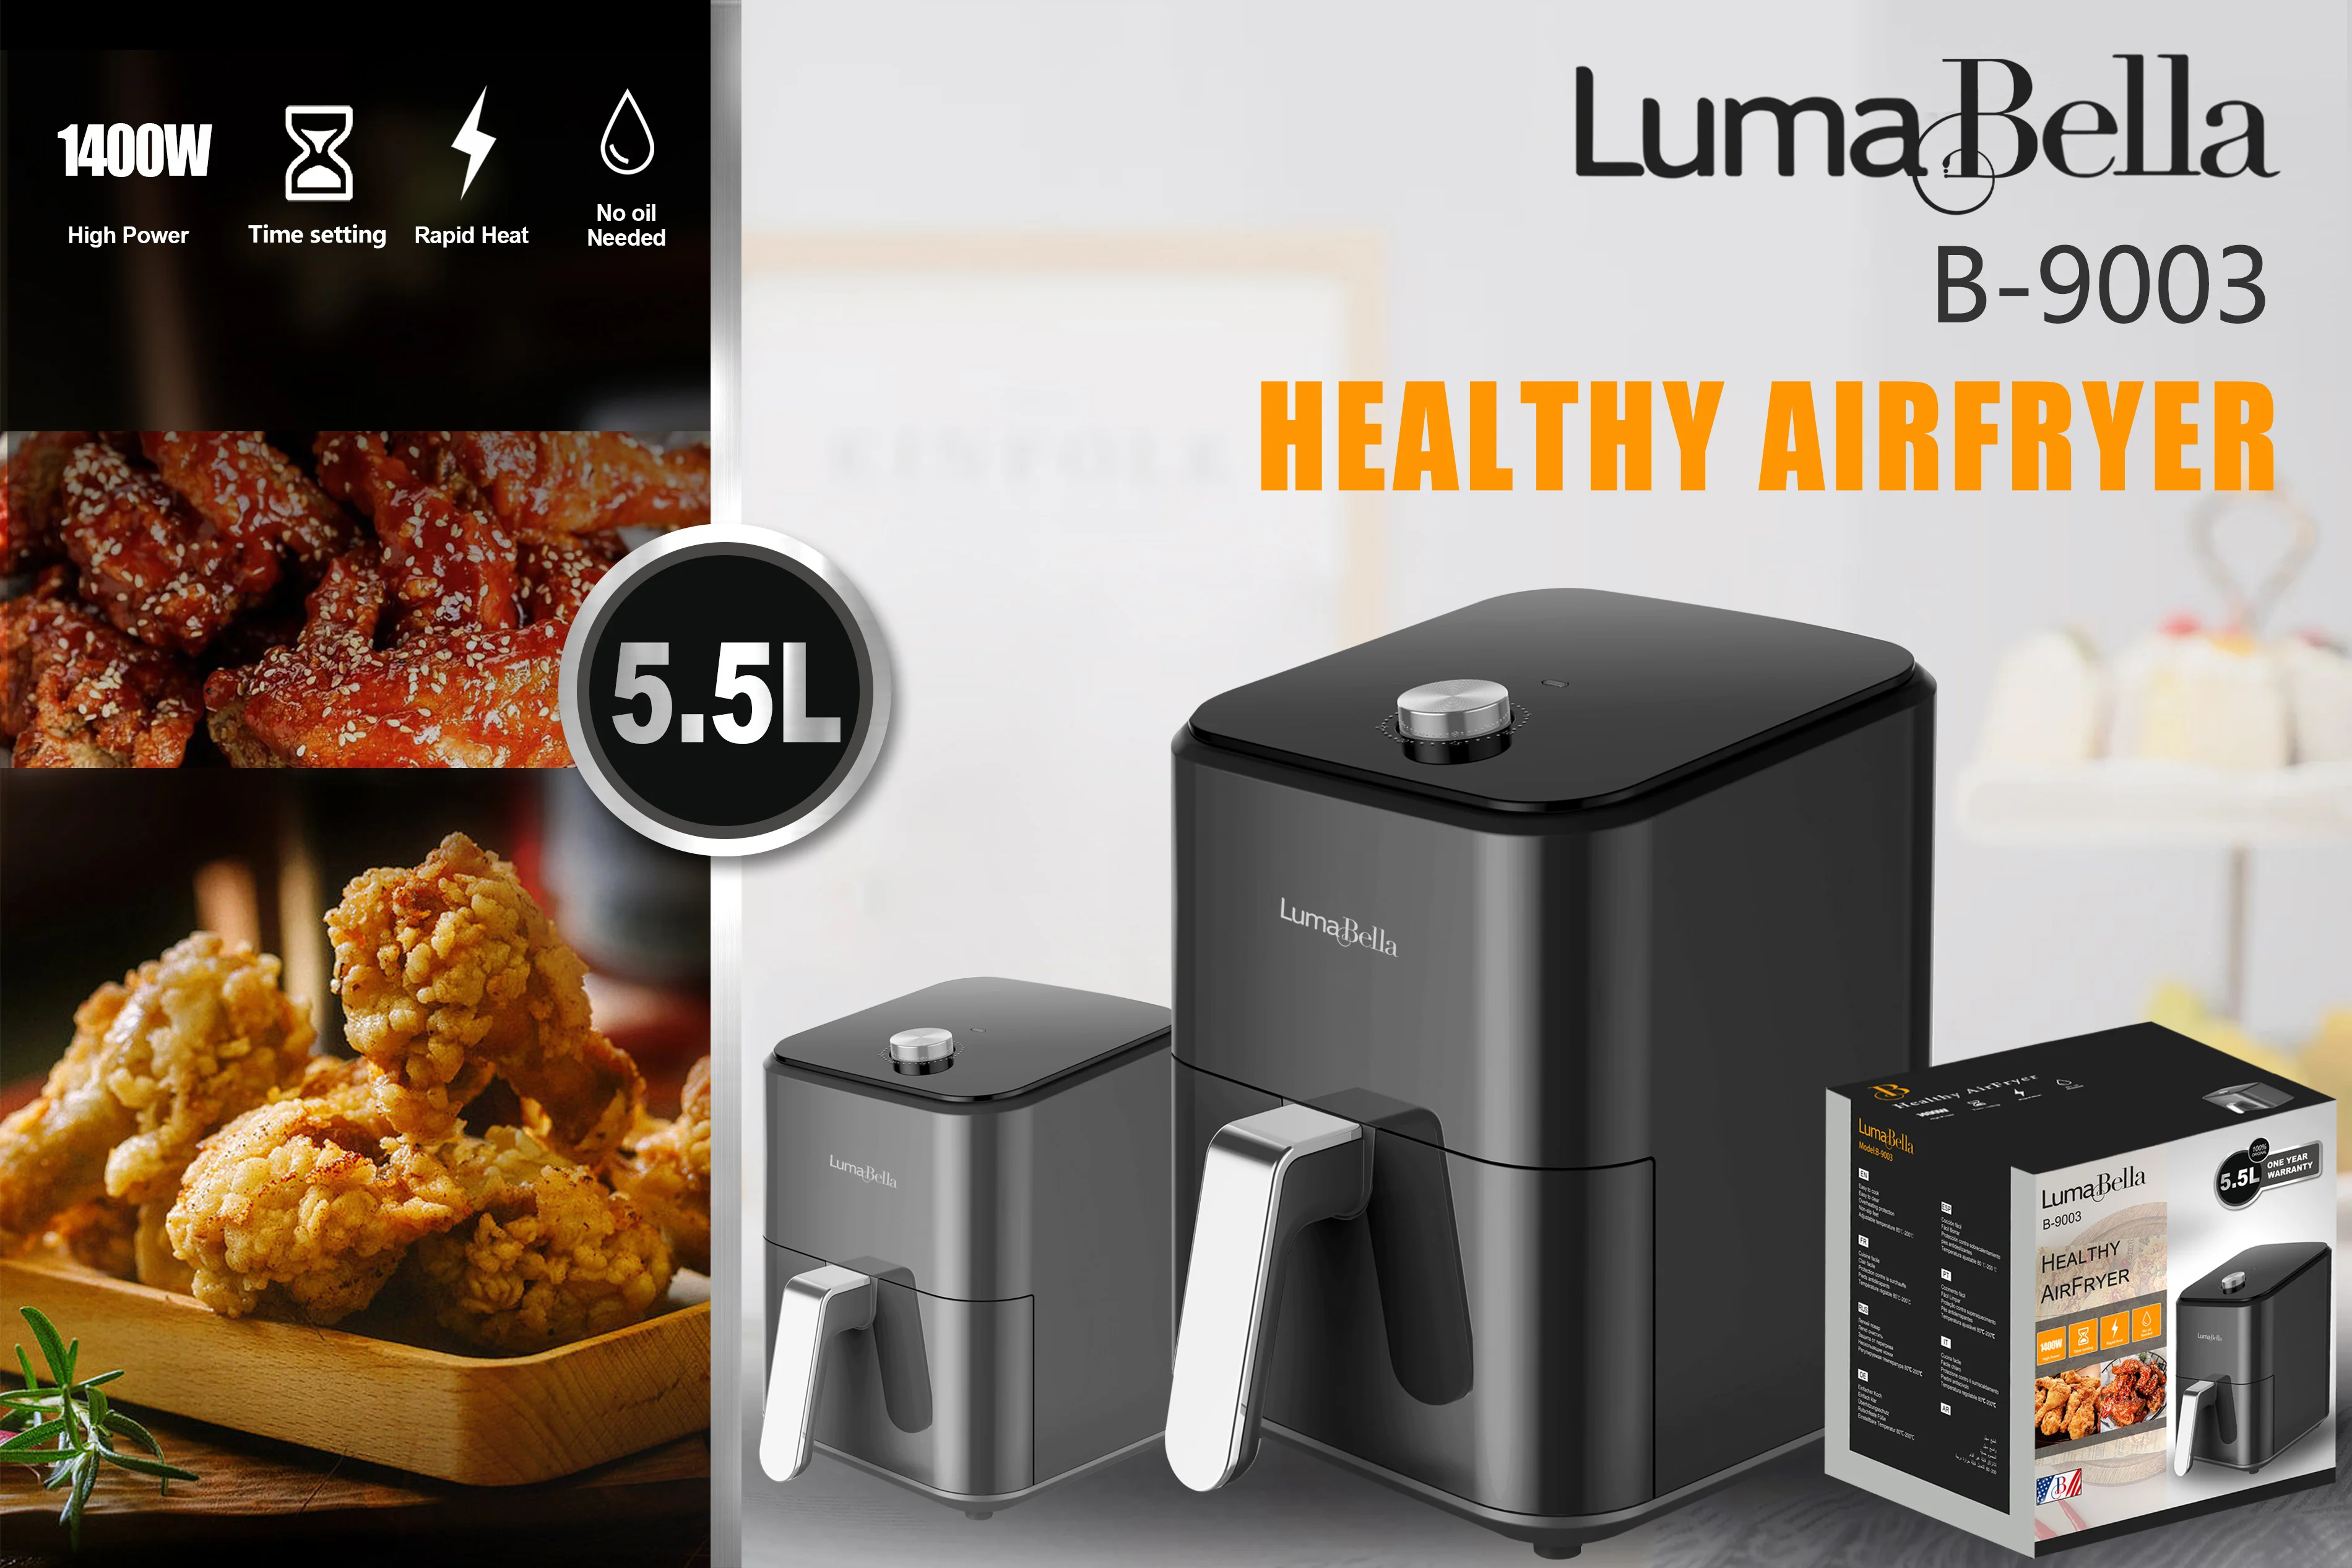 9003 luma bella best-selling air fryer